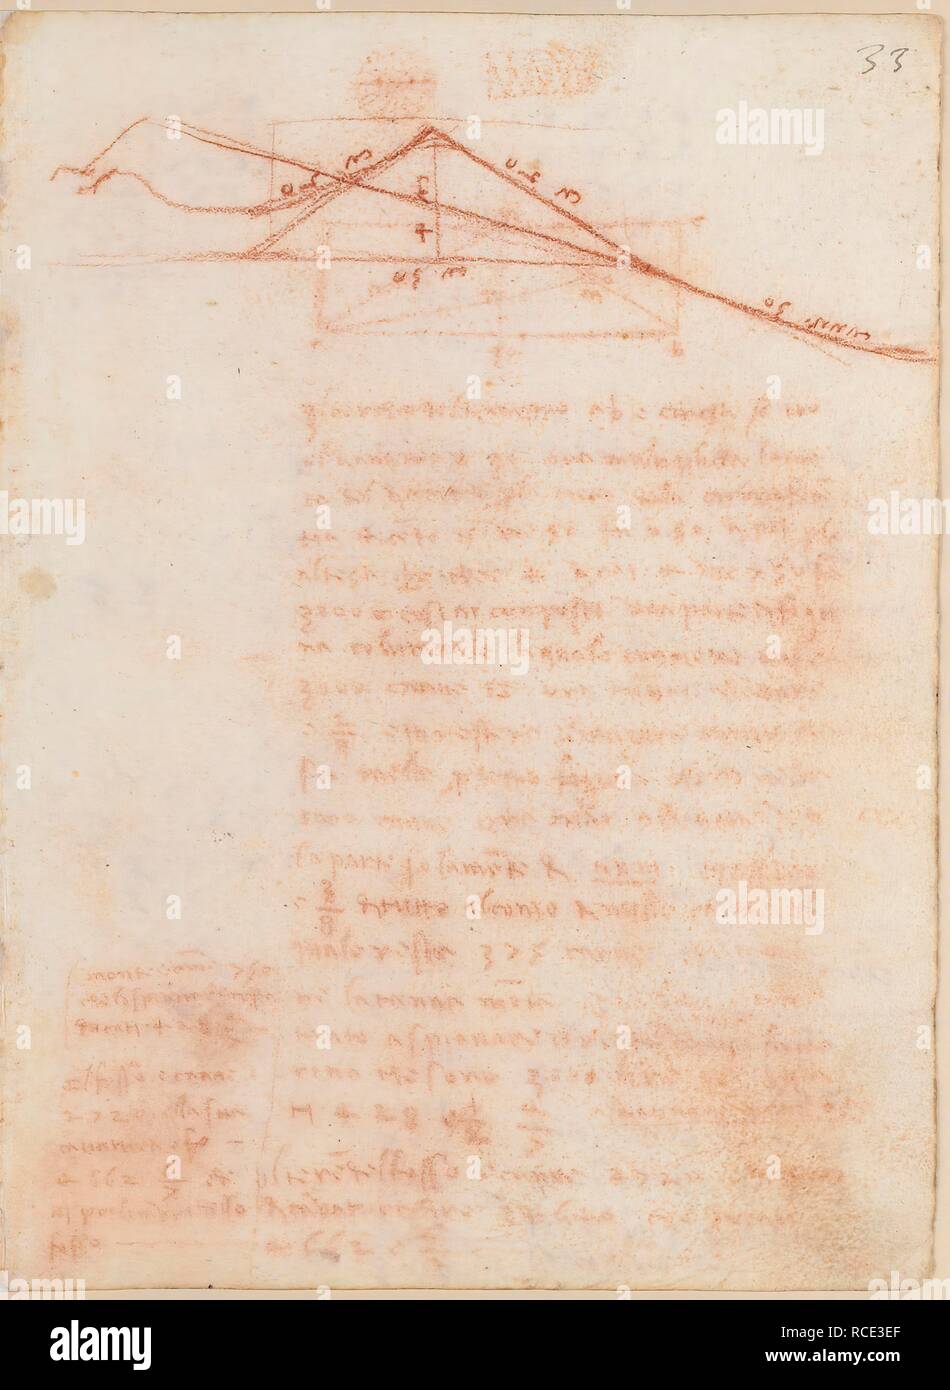 Folio f 33r. Codex Madrid II (Ms. 8936) 'Treaty of fortification, statics and geometry'. 158 folios with 316 pages. Internal format: 210 x 145 mm. CIVIL ENGINEERING, CONSTRUCTION. MILITARY ENGINEERING, FORTIFICATIONS. UNITS OF WEIGHT AND MEASURES. PRINCIPLES OF MECHANICS, CINEMATICS, DYNAMICS. Museum: BIBLIOTECA NACIONAL DE ESPAÑA, MADRID. Author: LEONARDO DA VINCI. Stock Photo